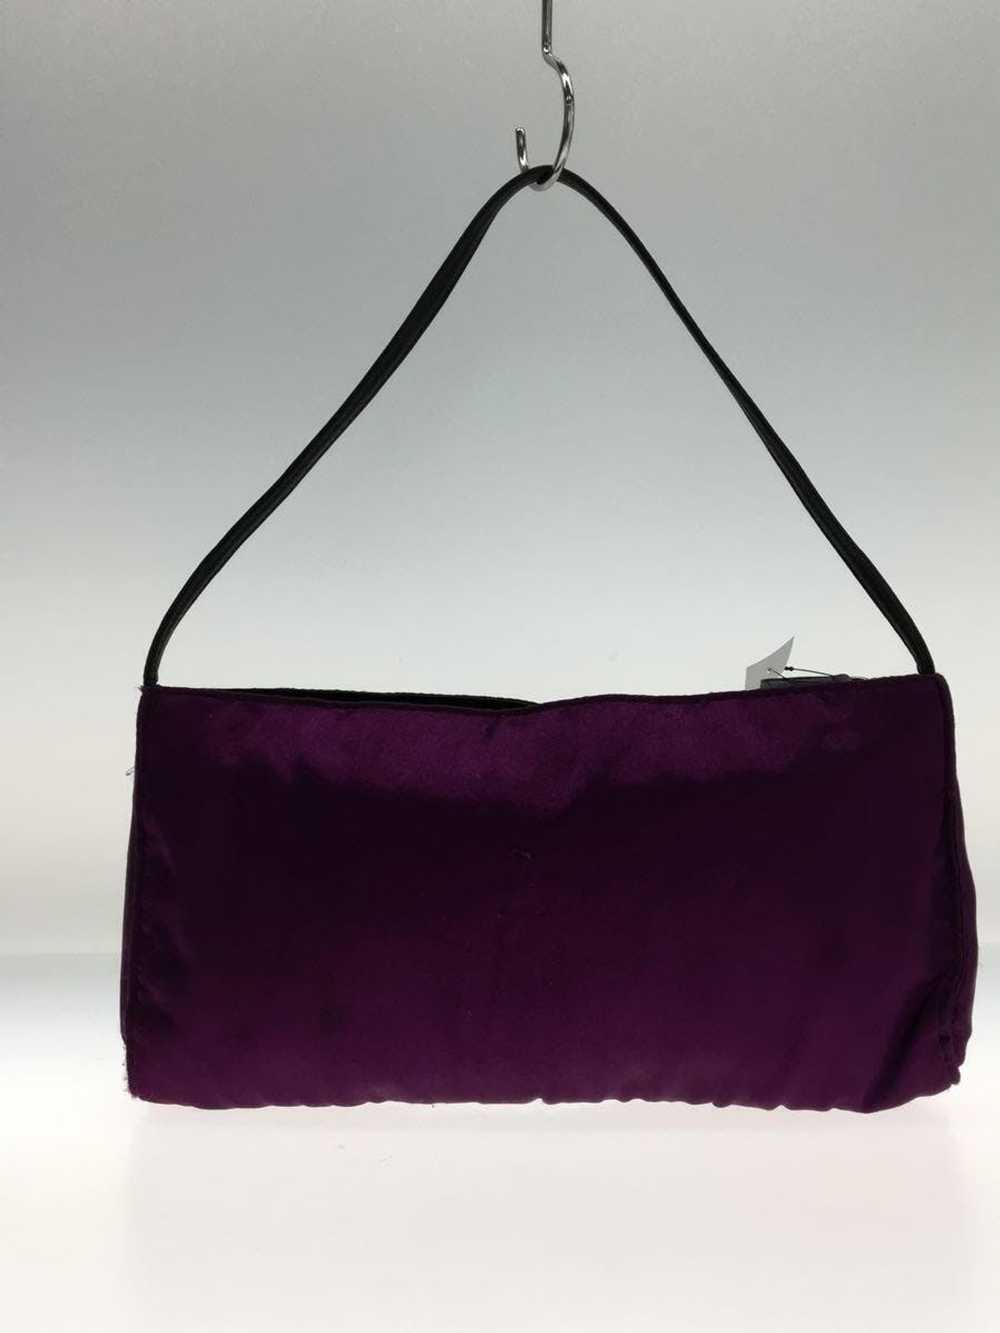 Jean Paul Gaultier Studded Handbag - image 3